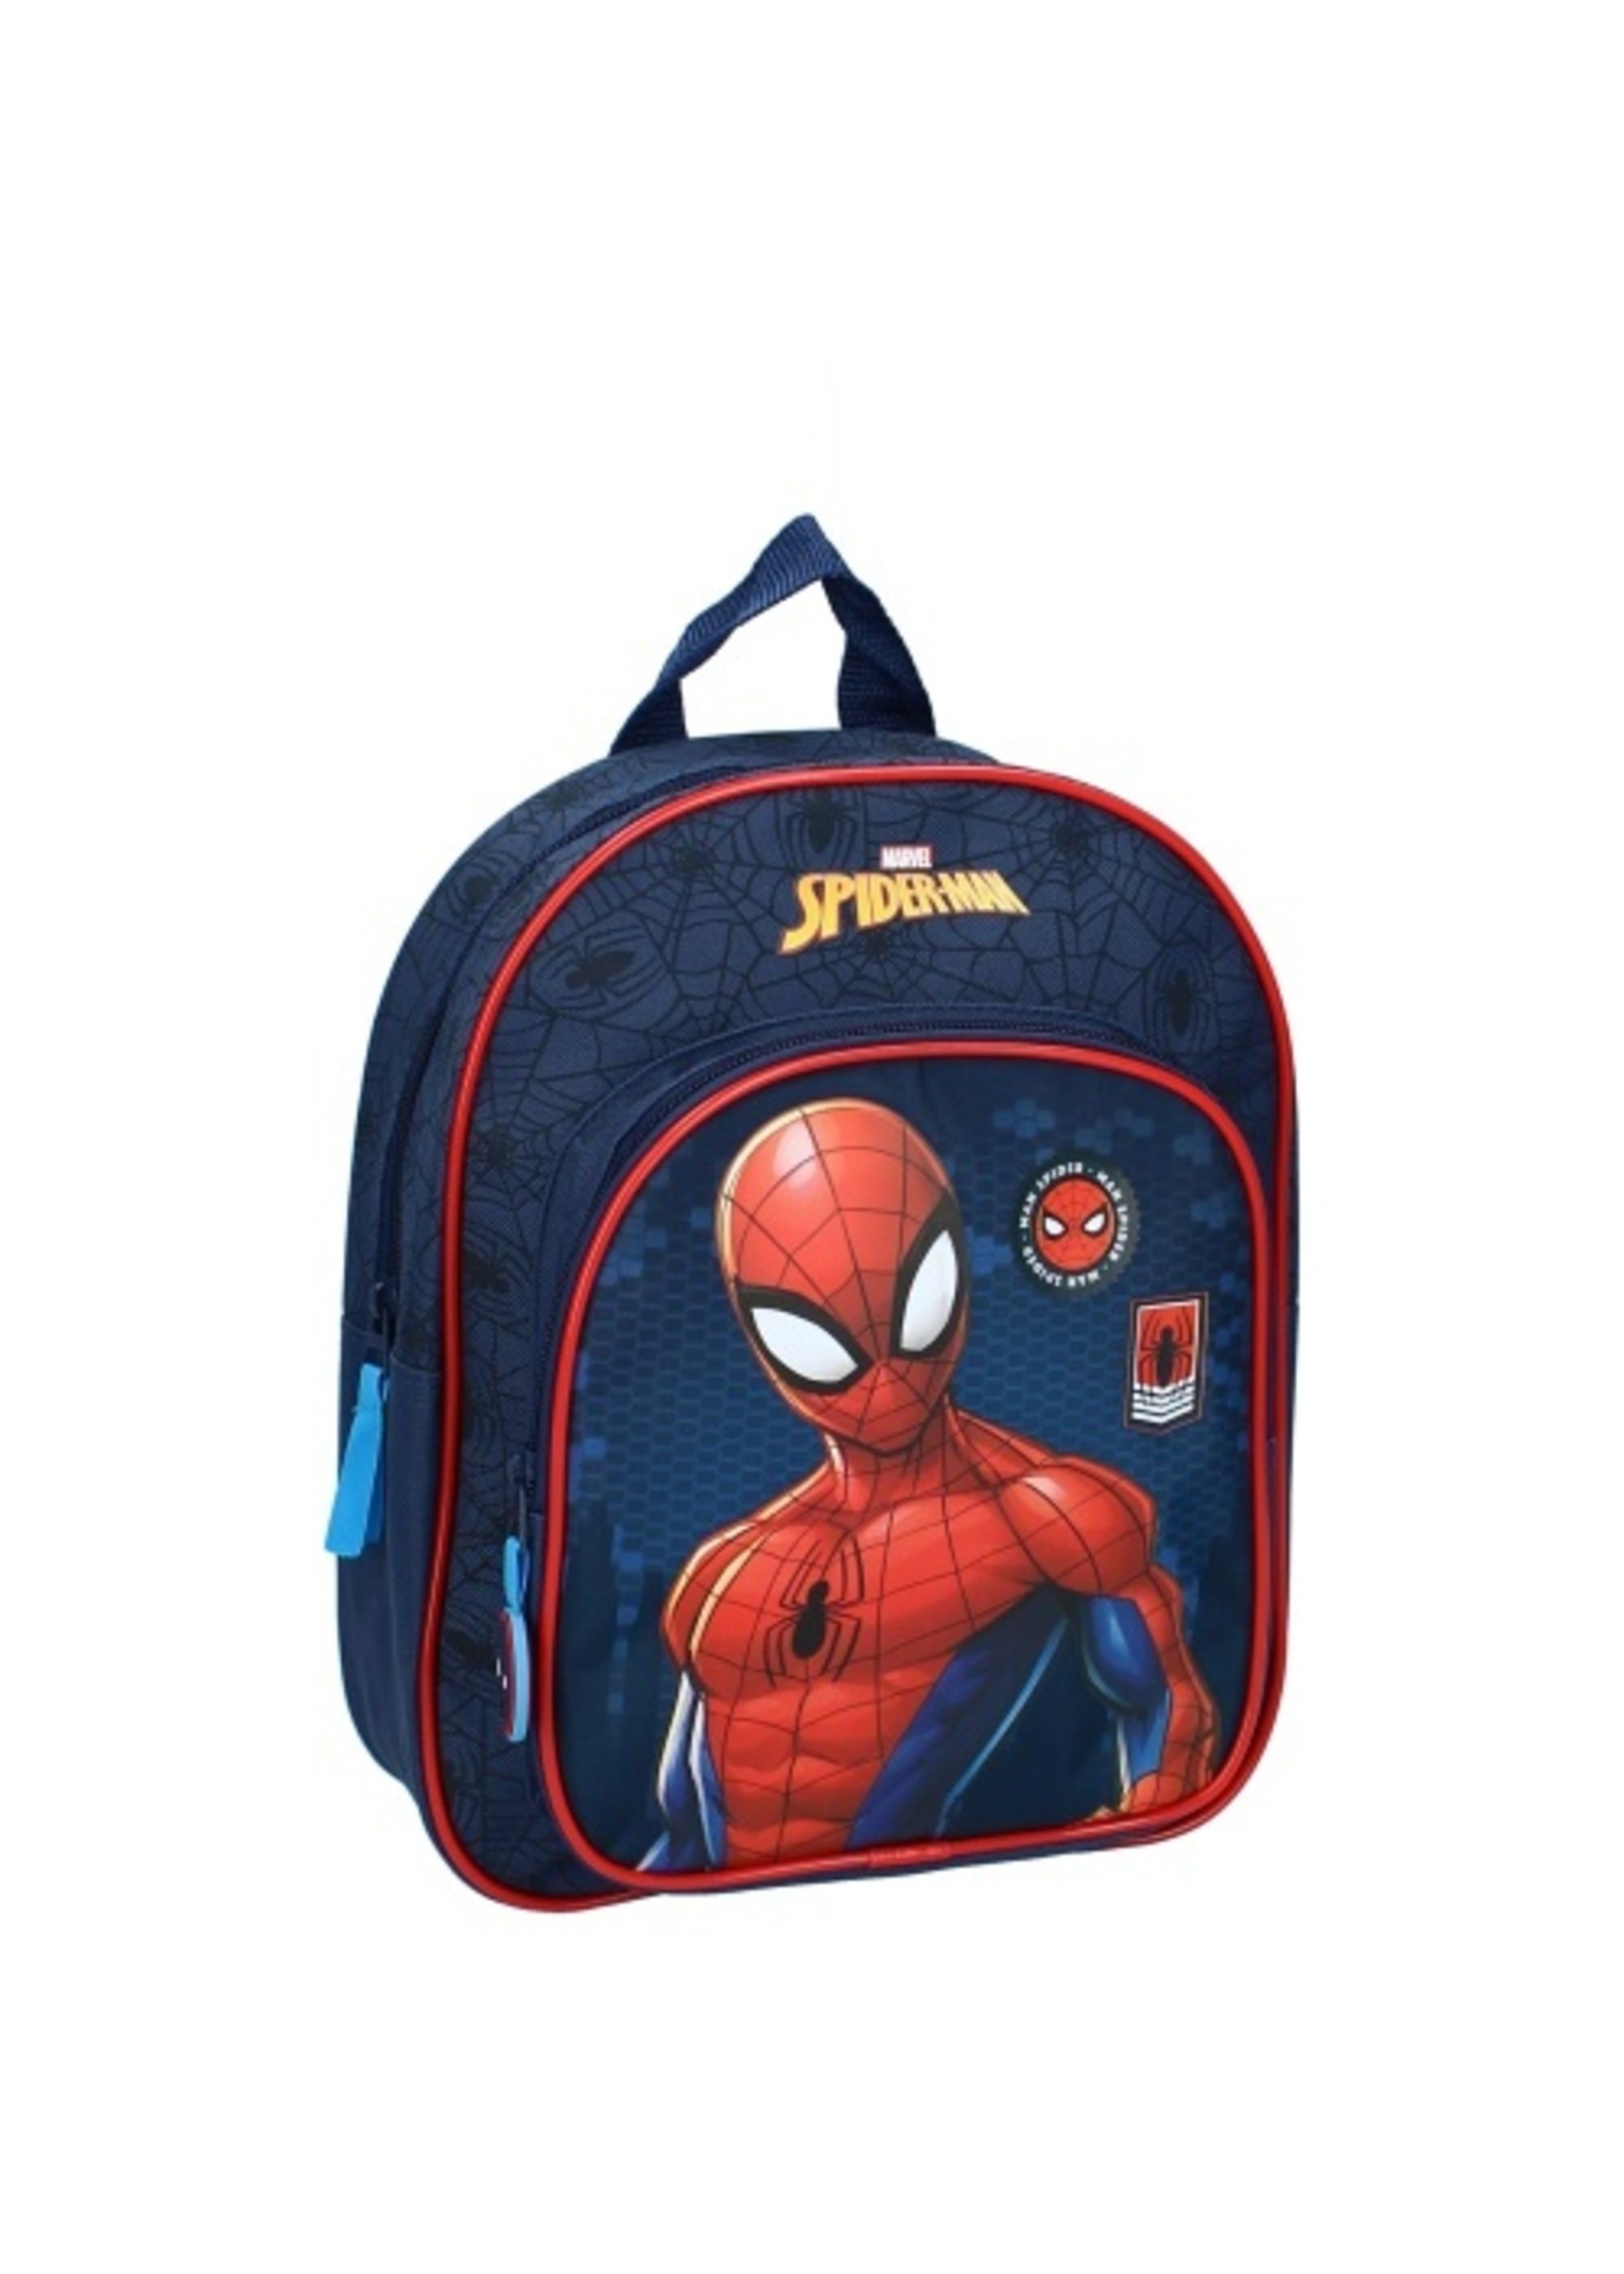 Marvel Spiderman backpack from Marvel